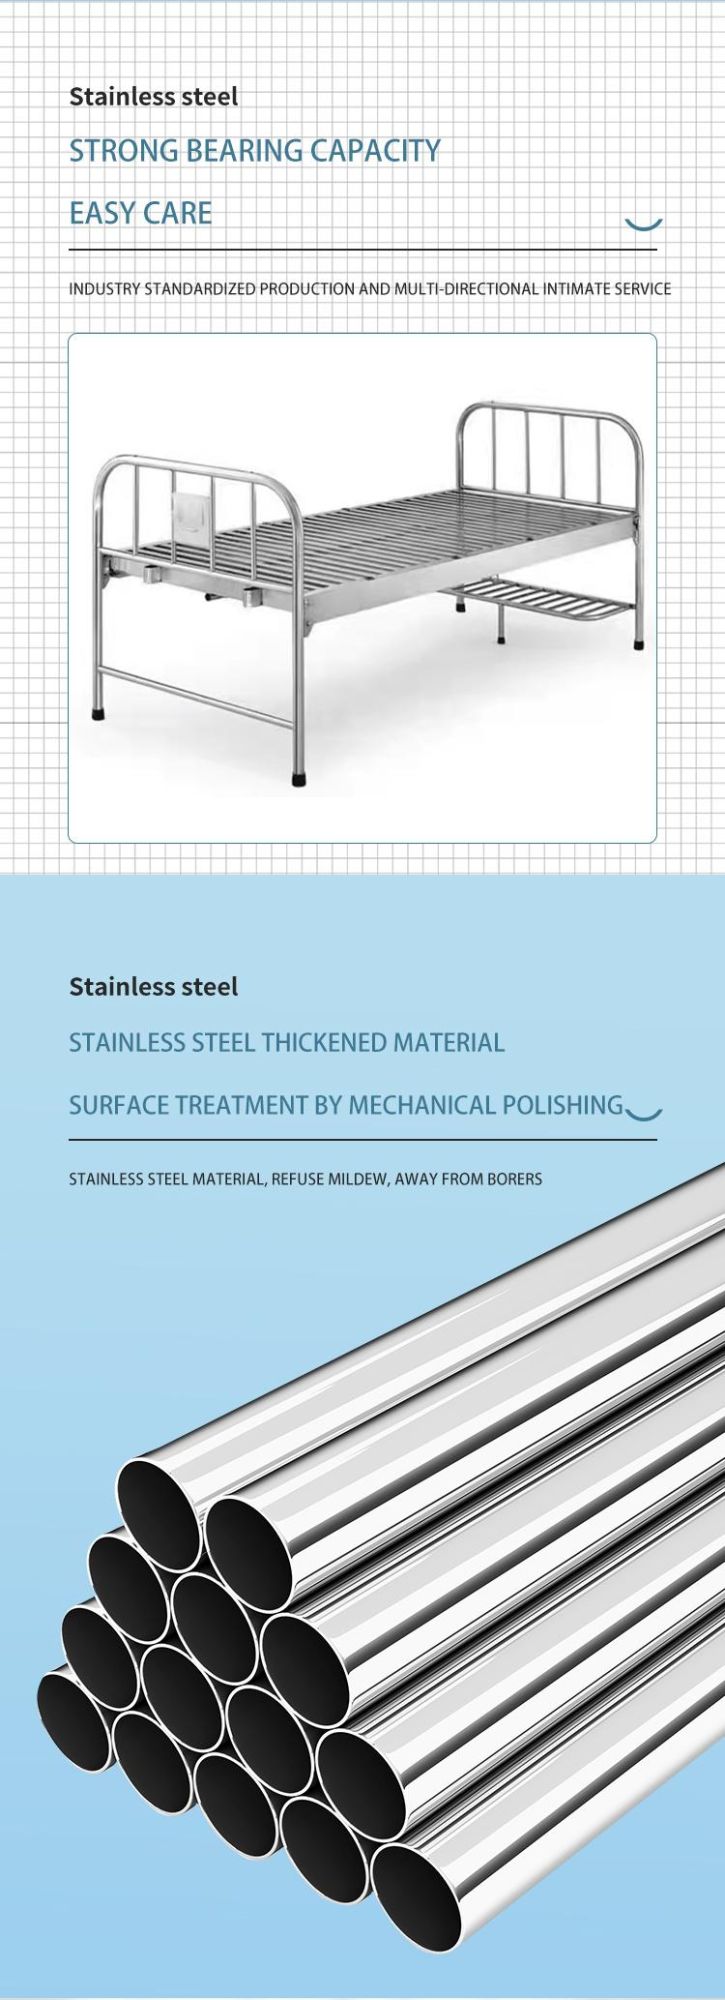 Manual Sickbed (stainless steel headband single swing bed)